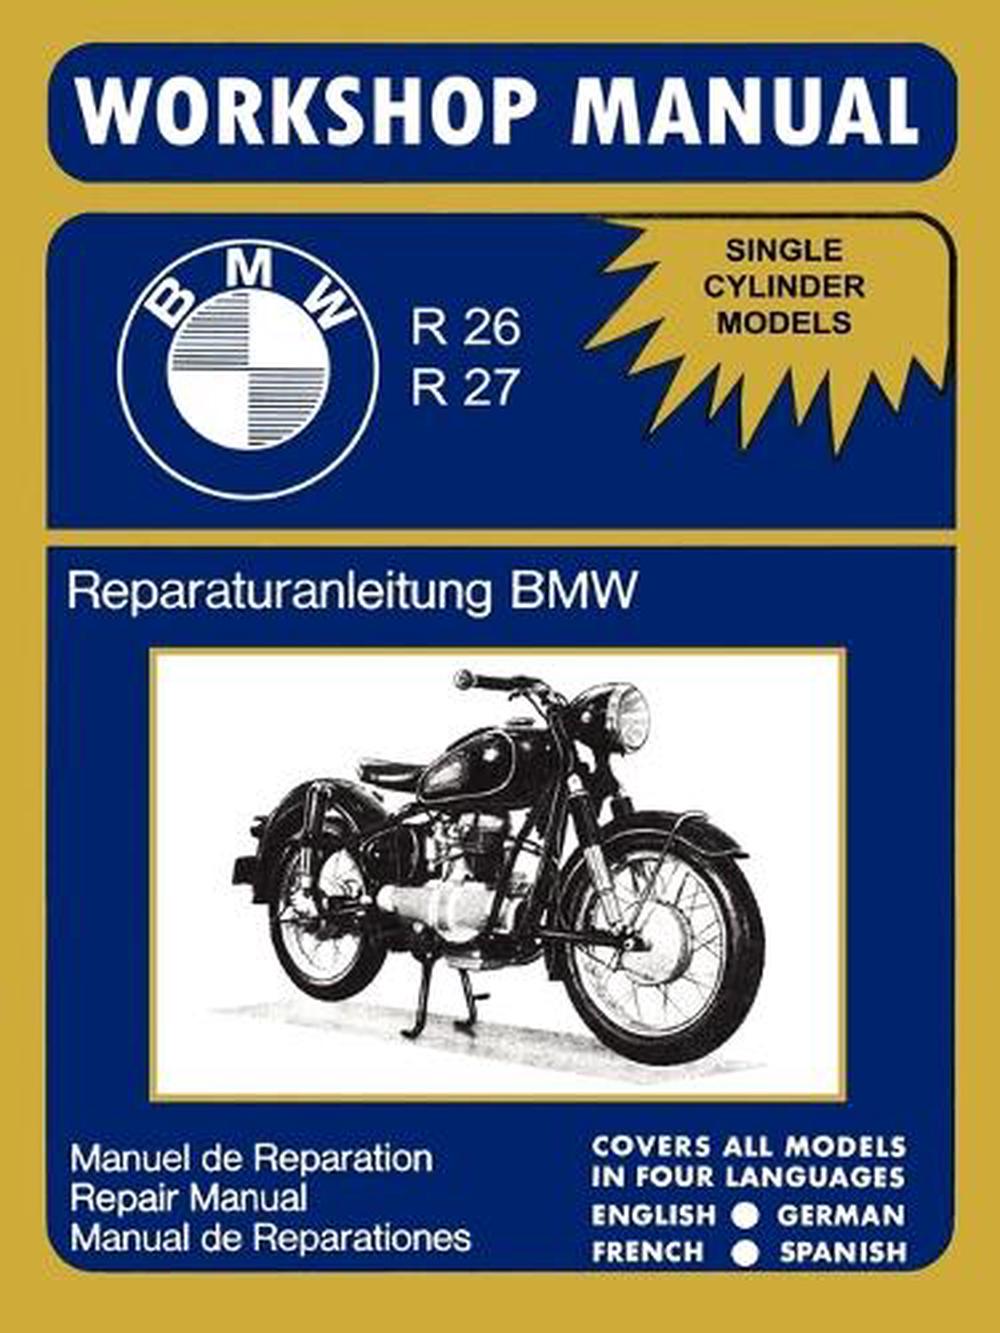 BMW Motorcycles Factory Workshop Manual R26 R27 (1956-1967) by Bmw